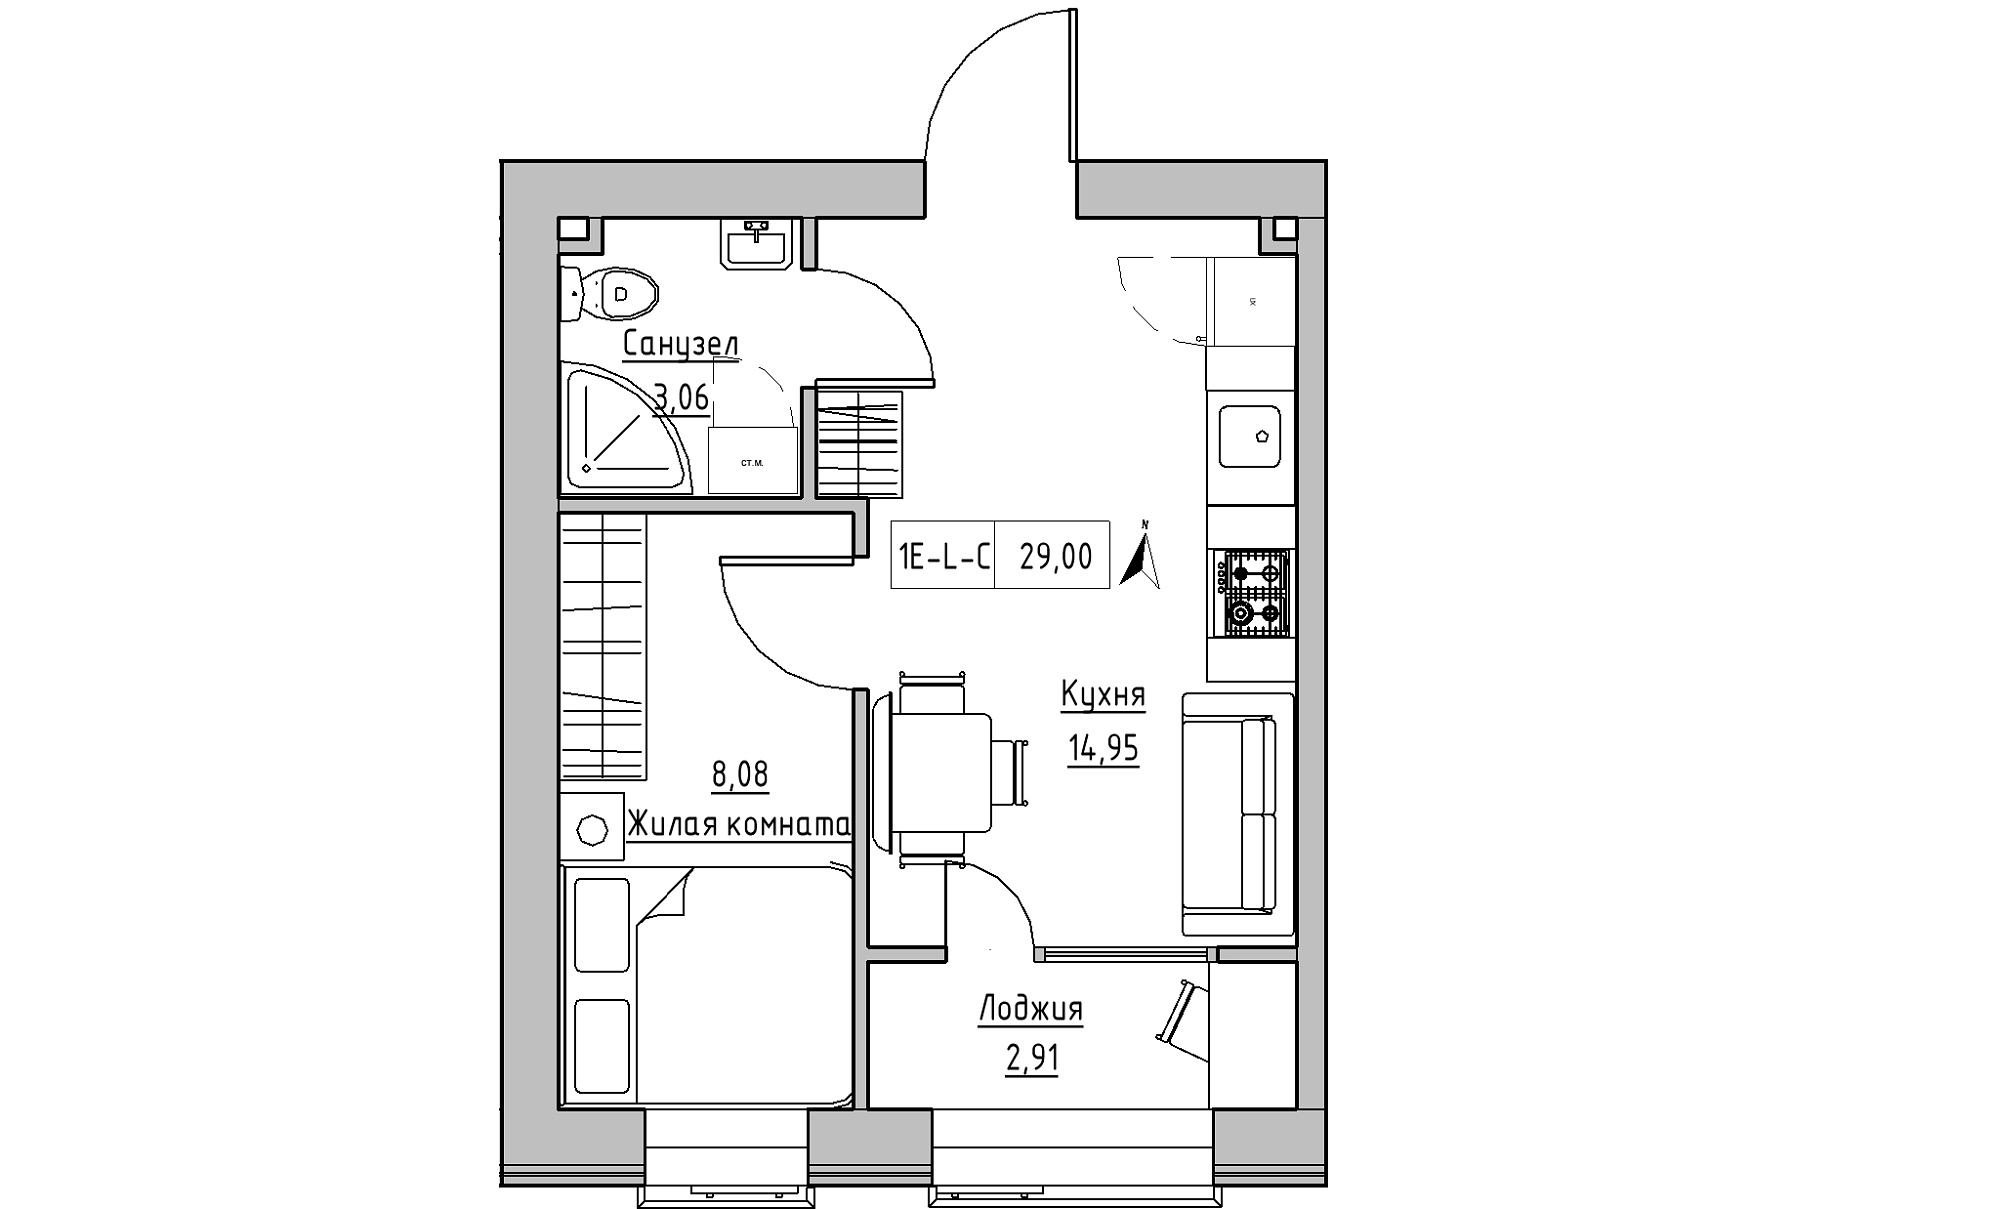 Planning 1-rm flats area 29m2, KS-016-03/0007.